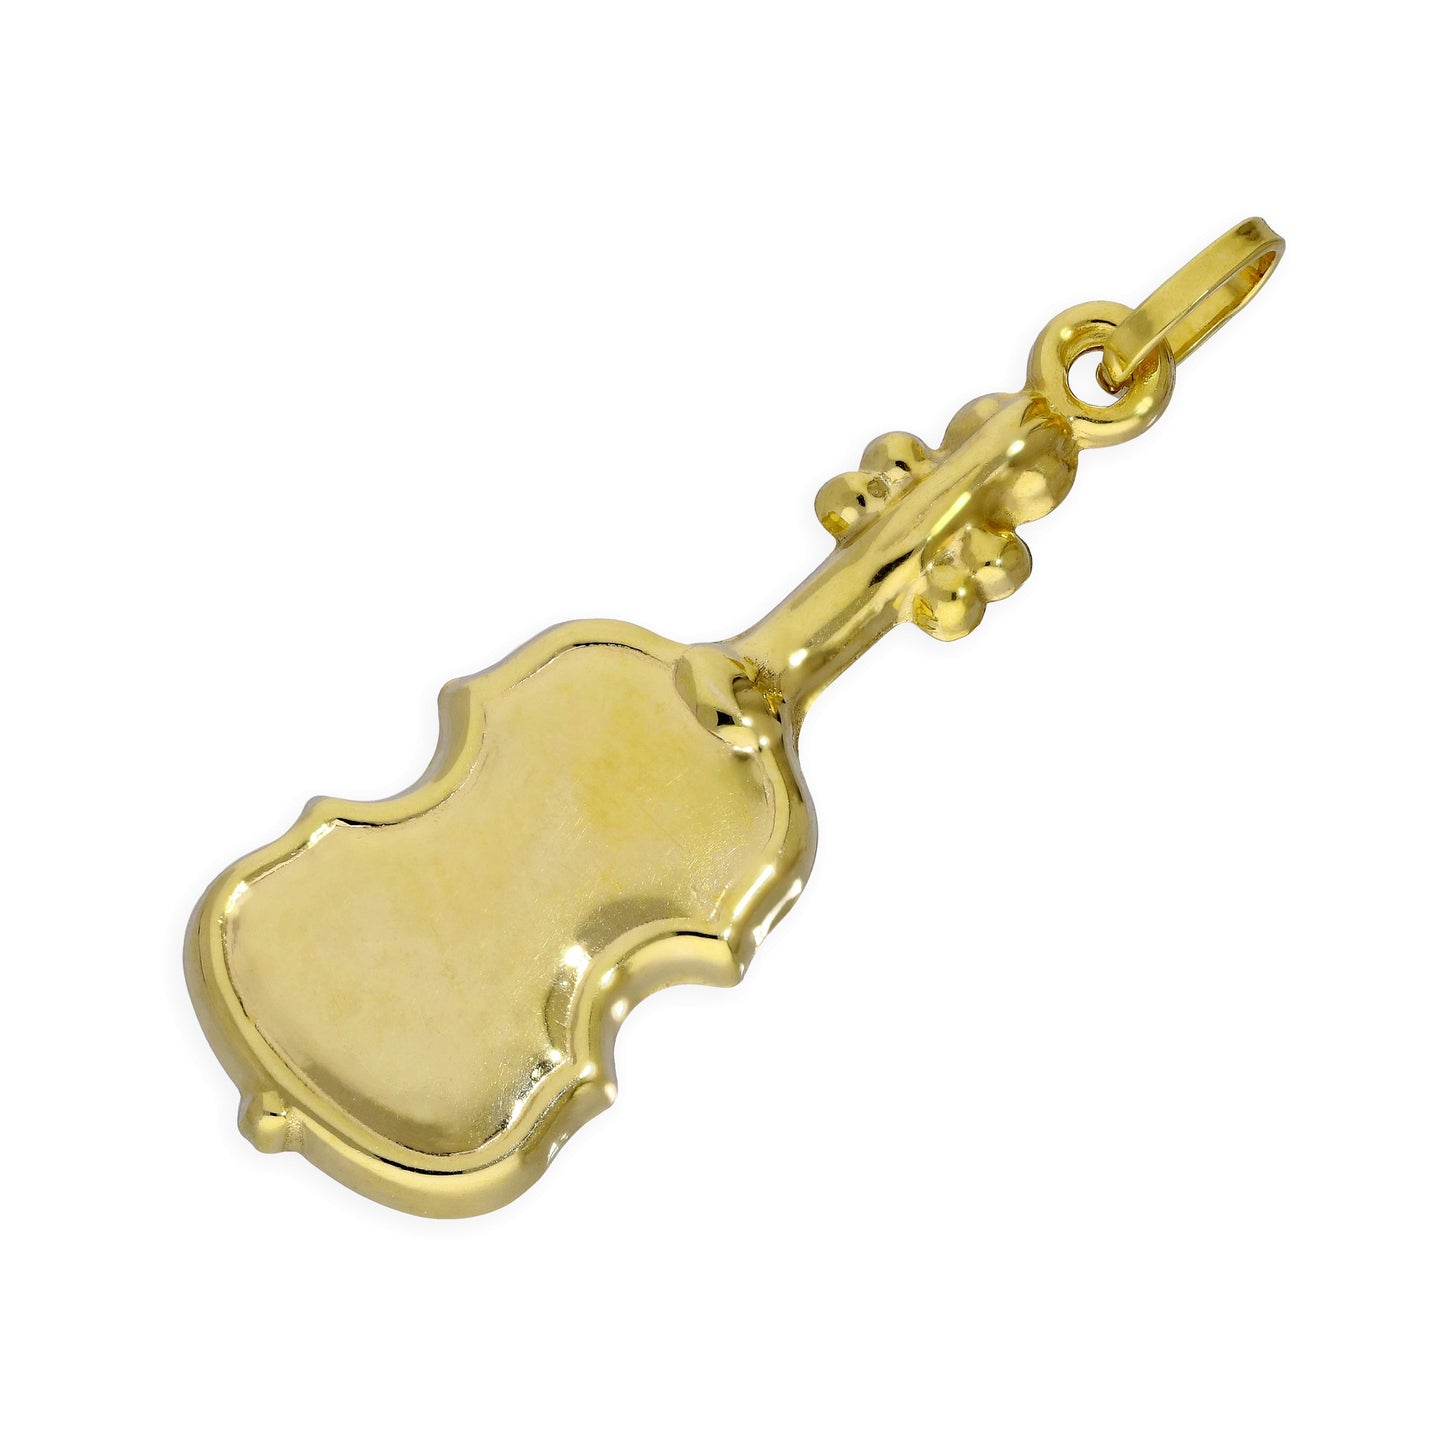 9ct Gold Hollow Violin Charm